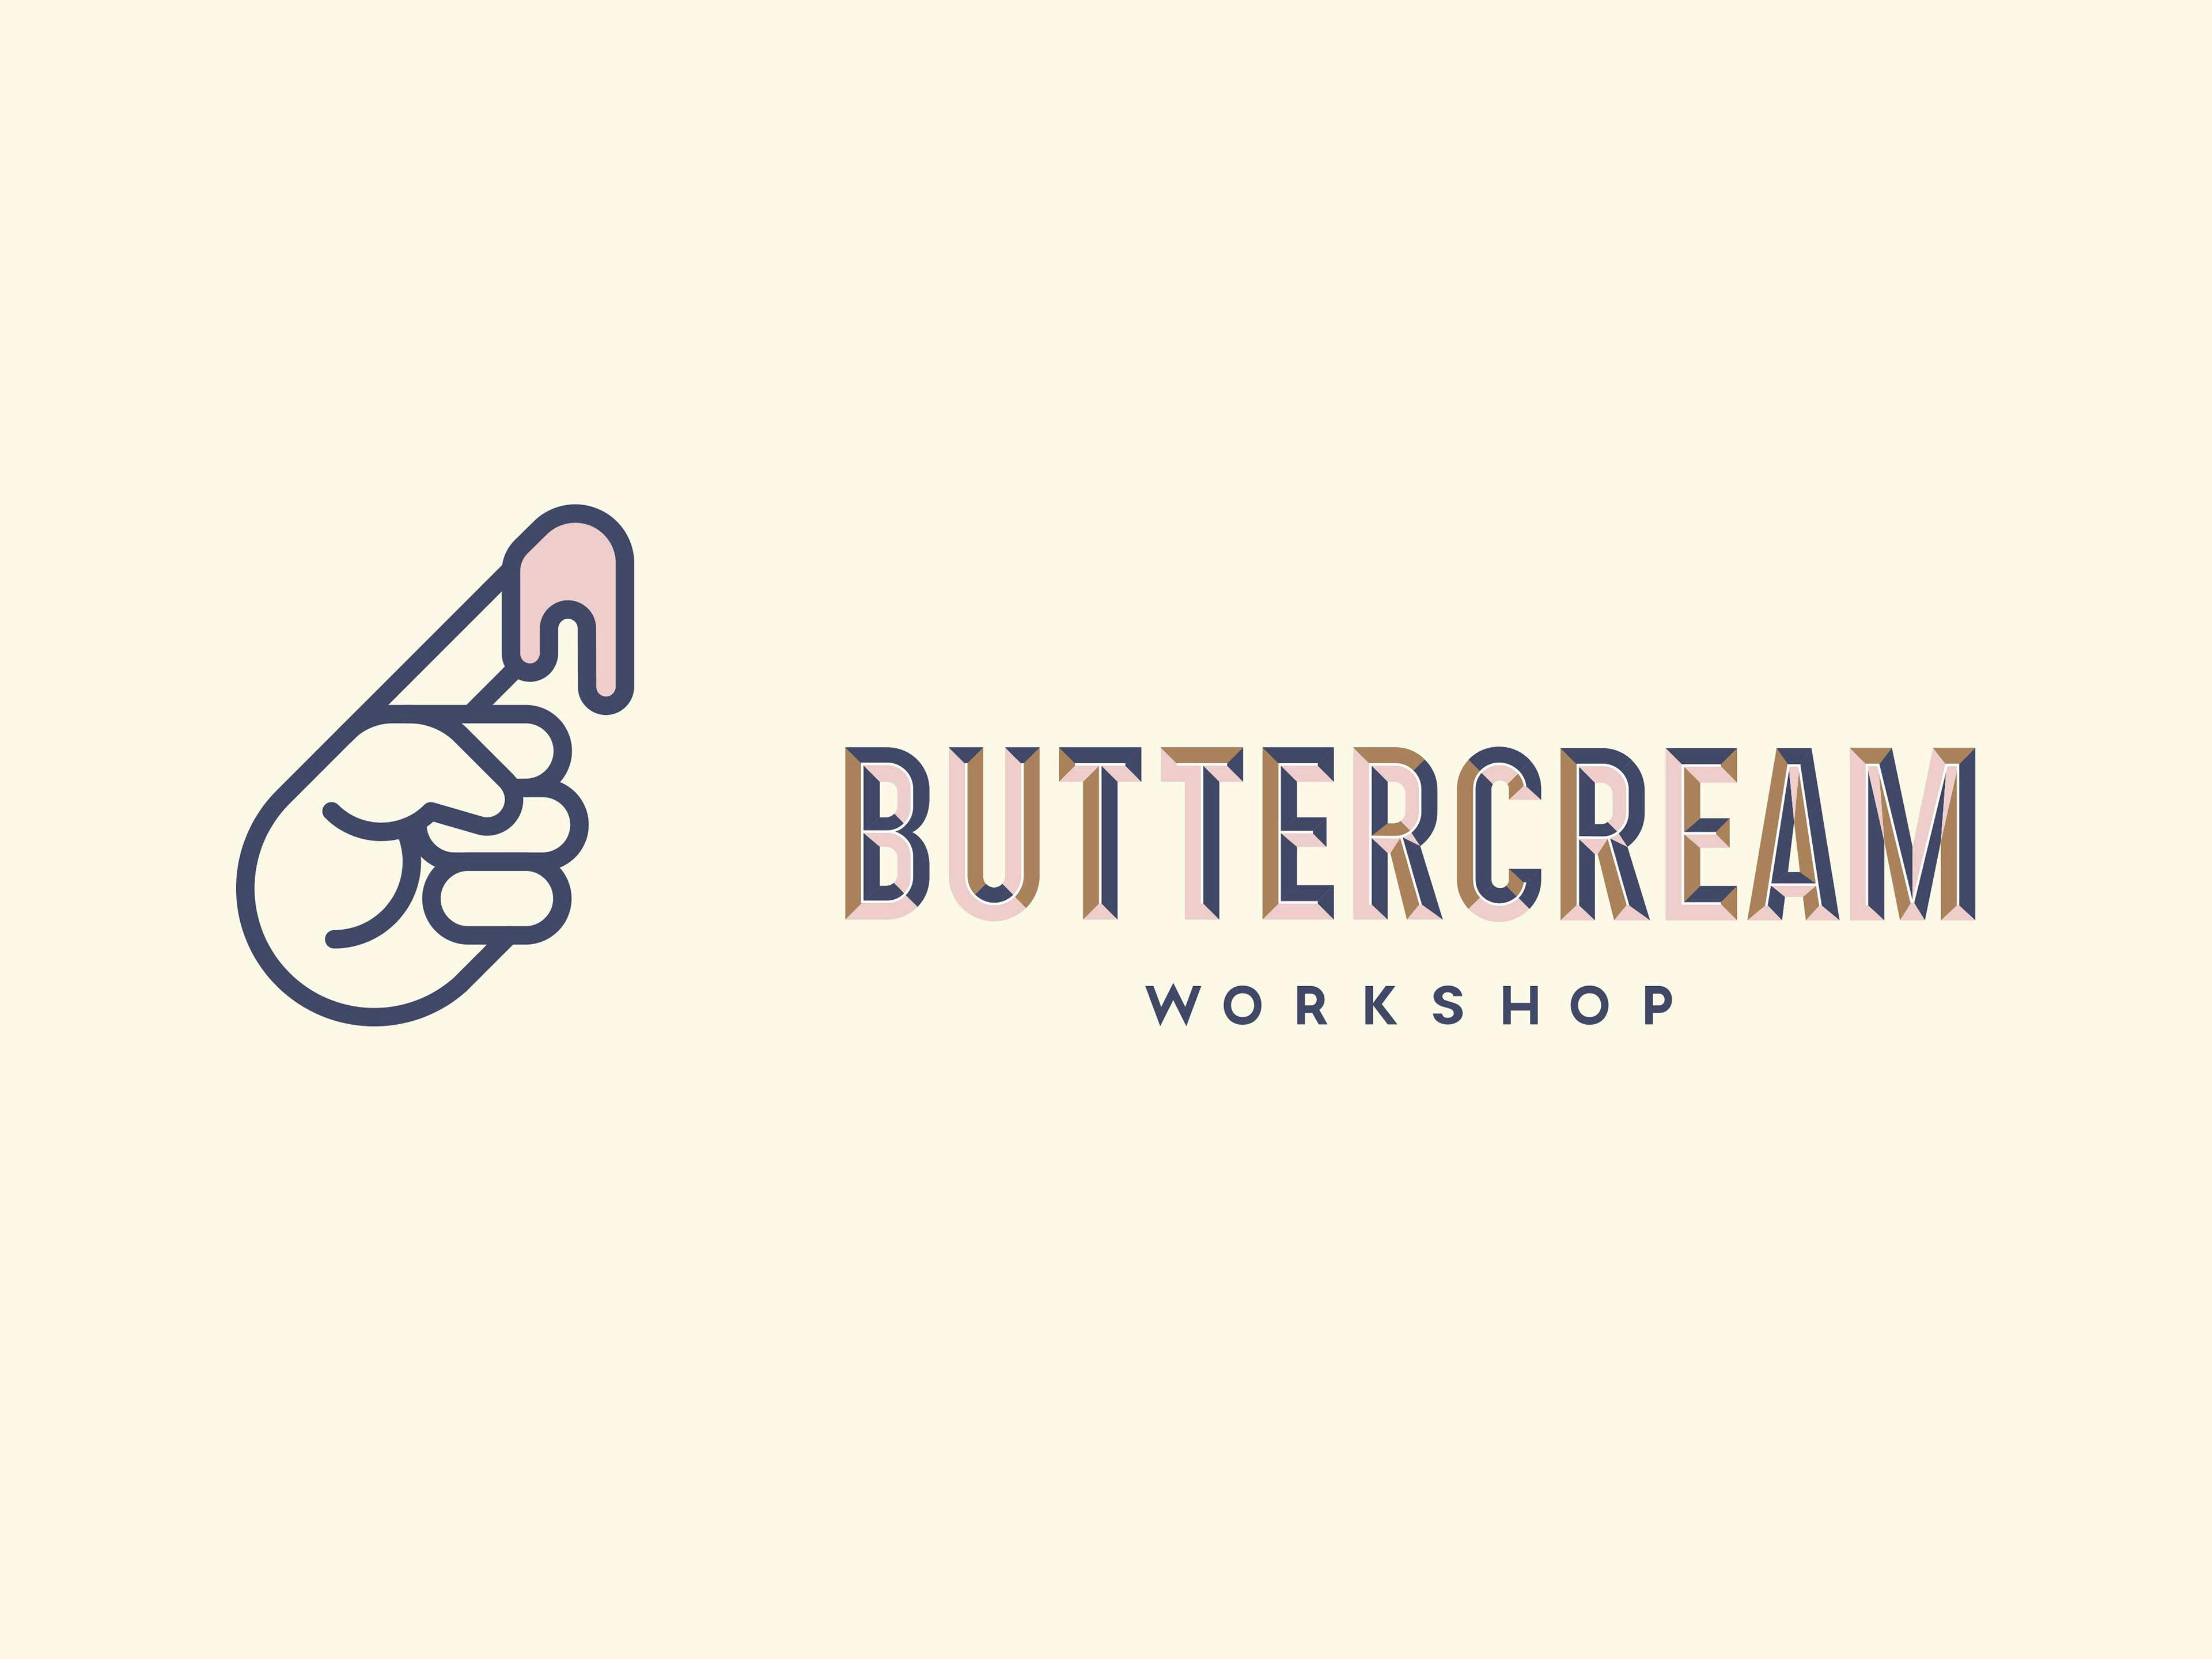 Buttercream Workshop Postcard Design